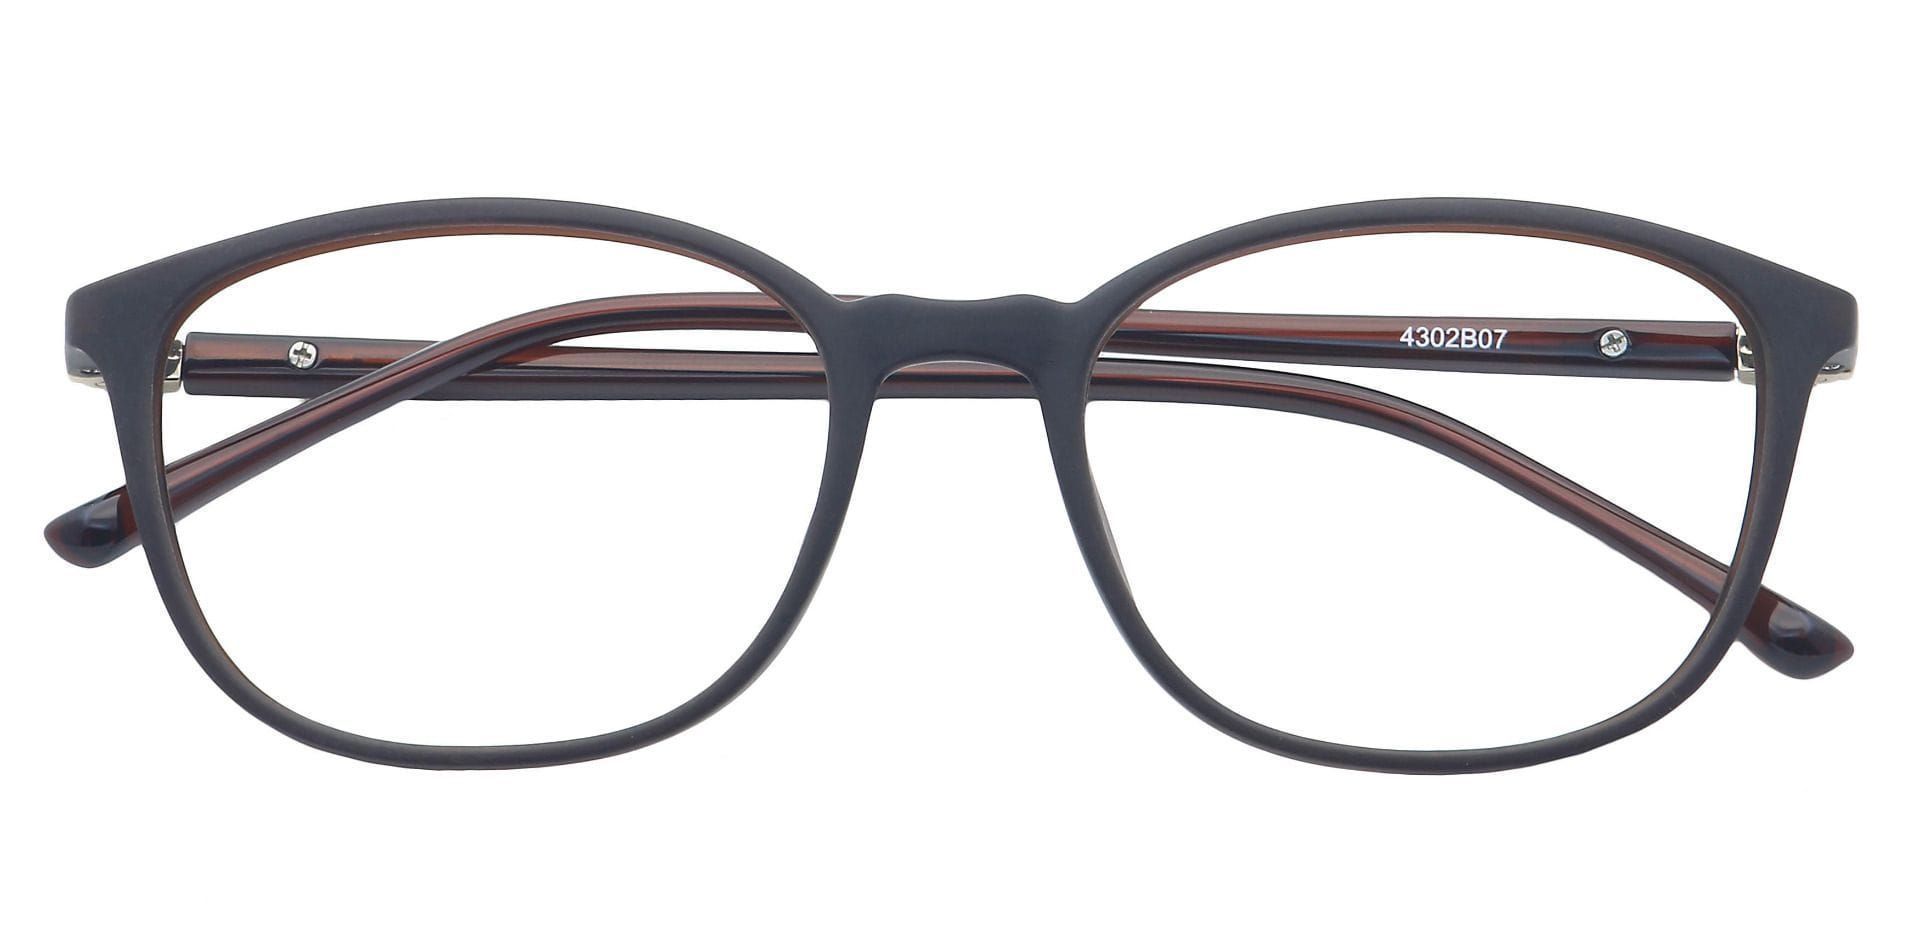 Karleen Oval Progressive Glasses - Brown